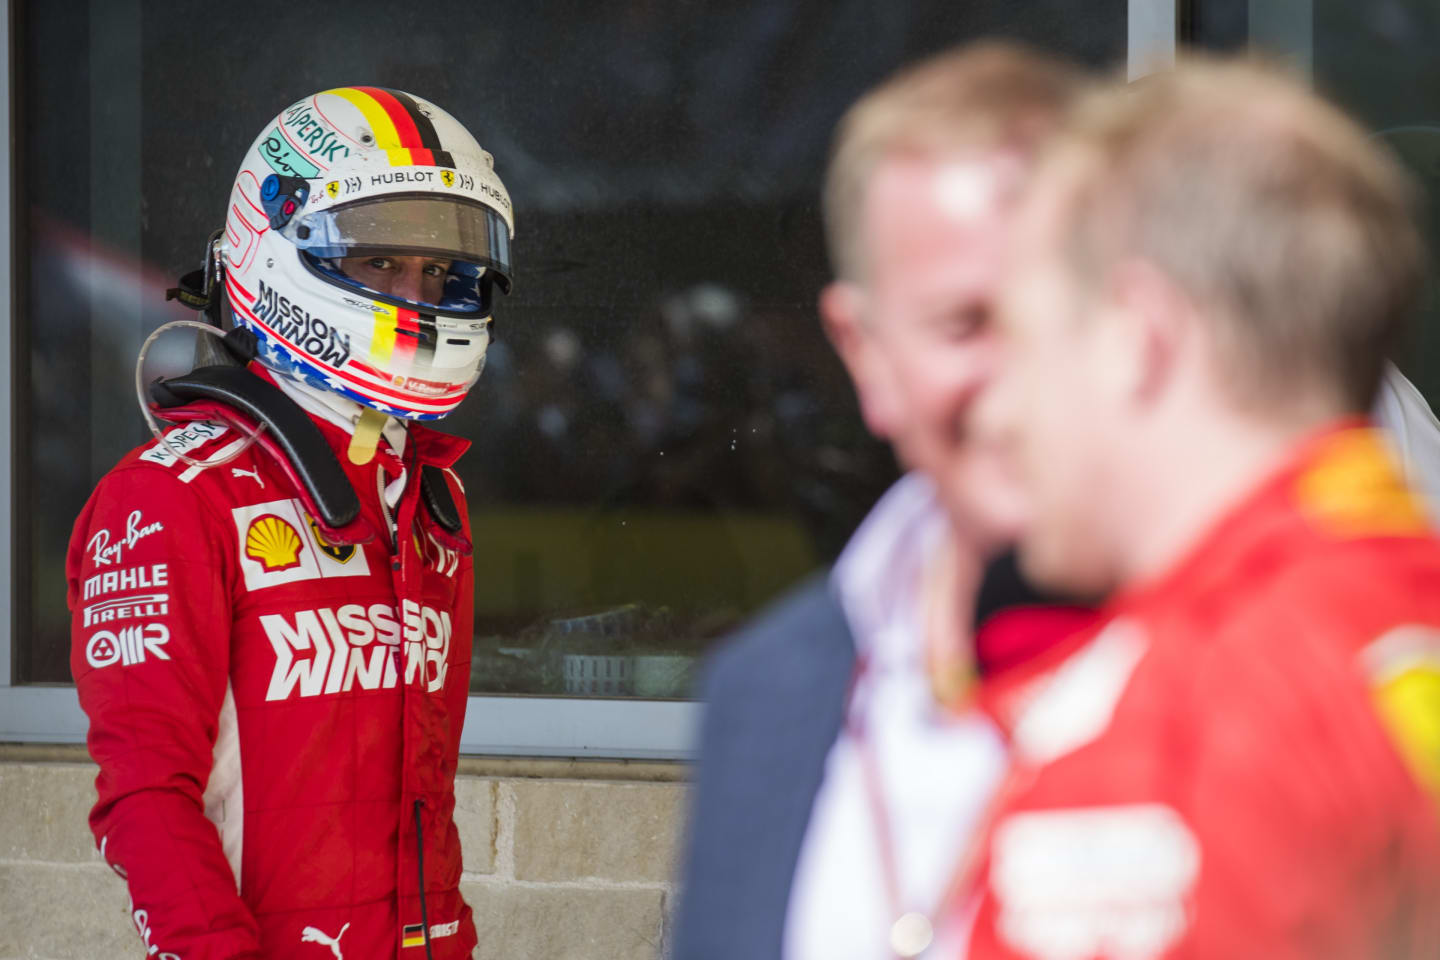 CIRCUIT OF THE AMERICAS, UNITED STATES OF AMERICA - OCTOBER 21: Sebastian Vettel, Ferrari, looks